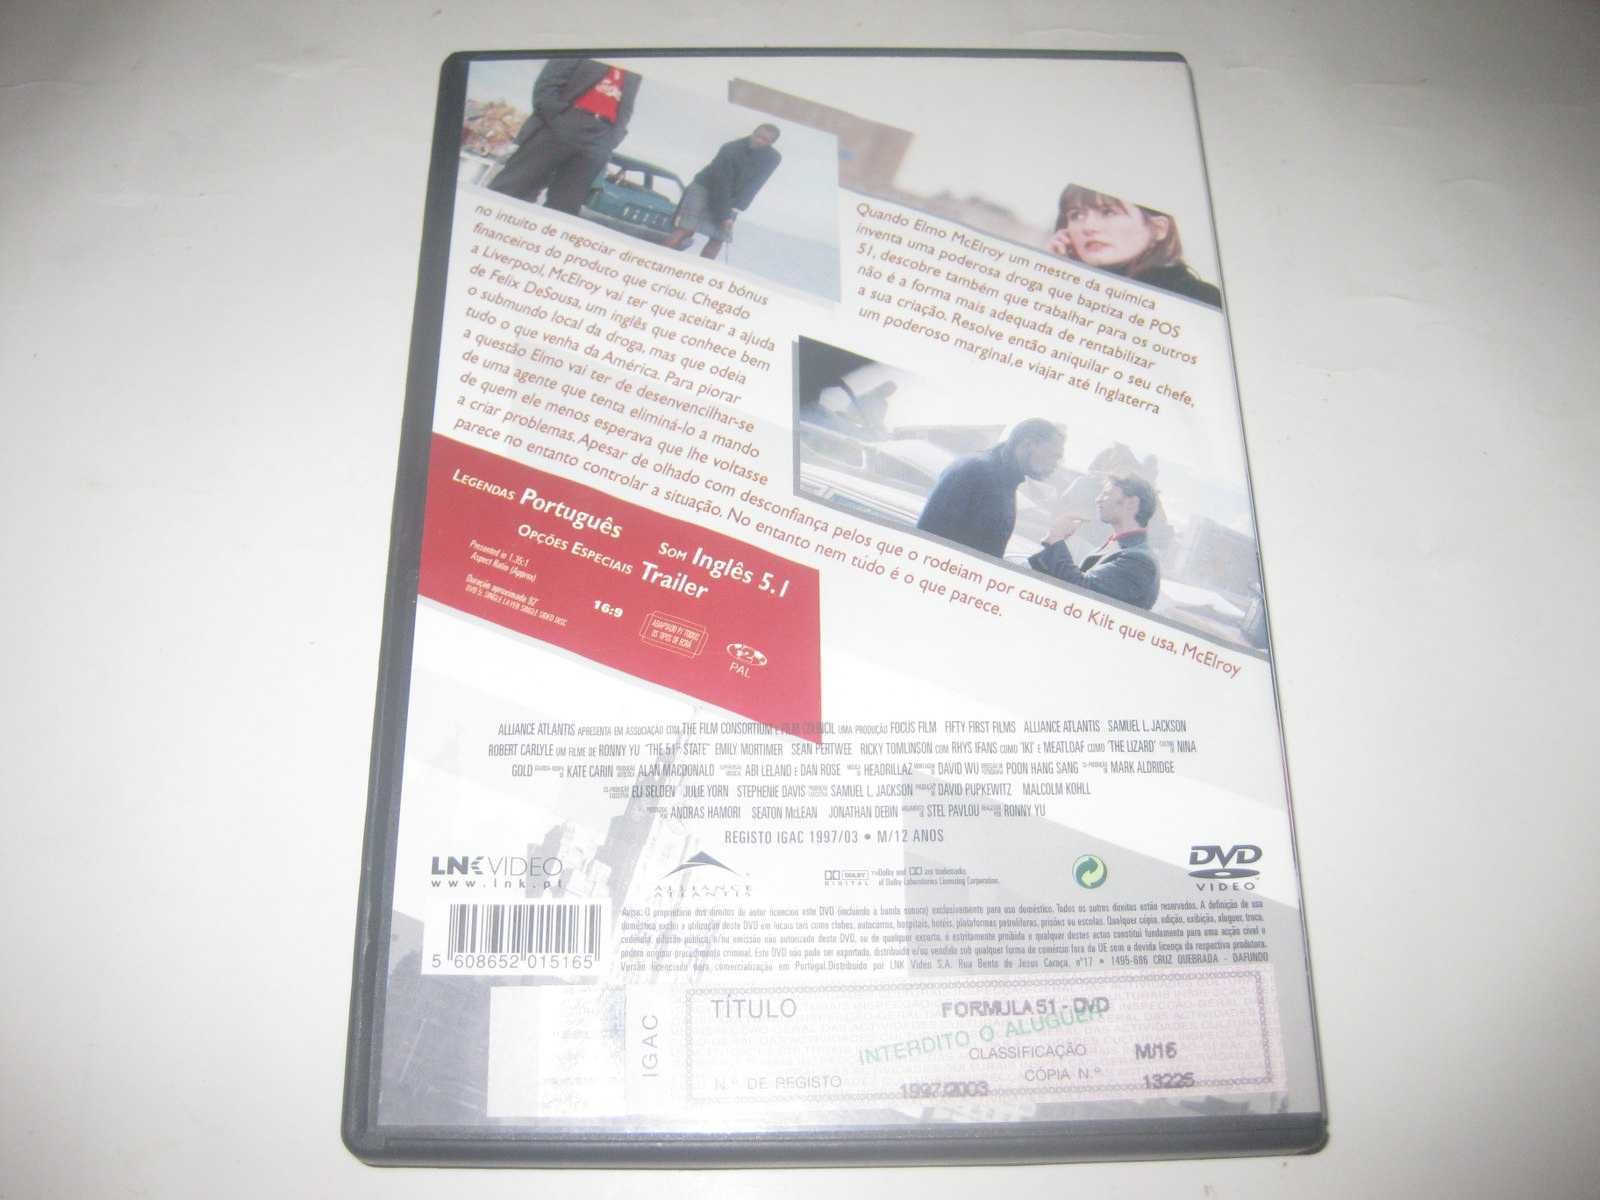 DVD "Fórmula 51" com Samuel L. Jackson